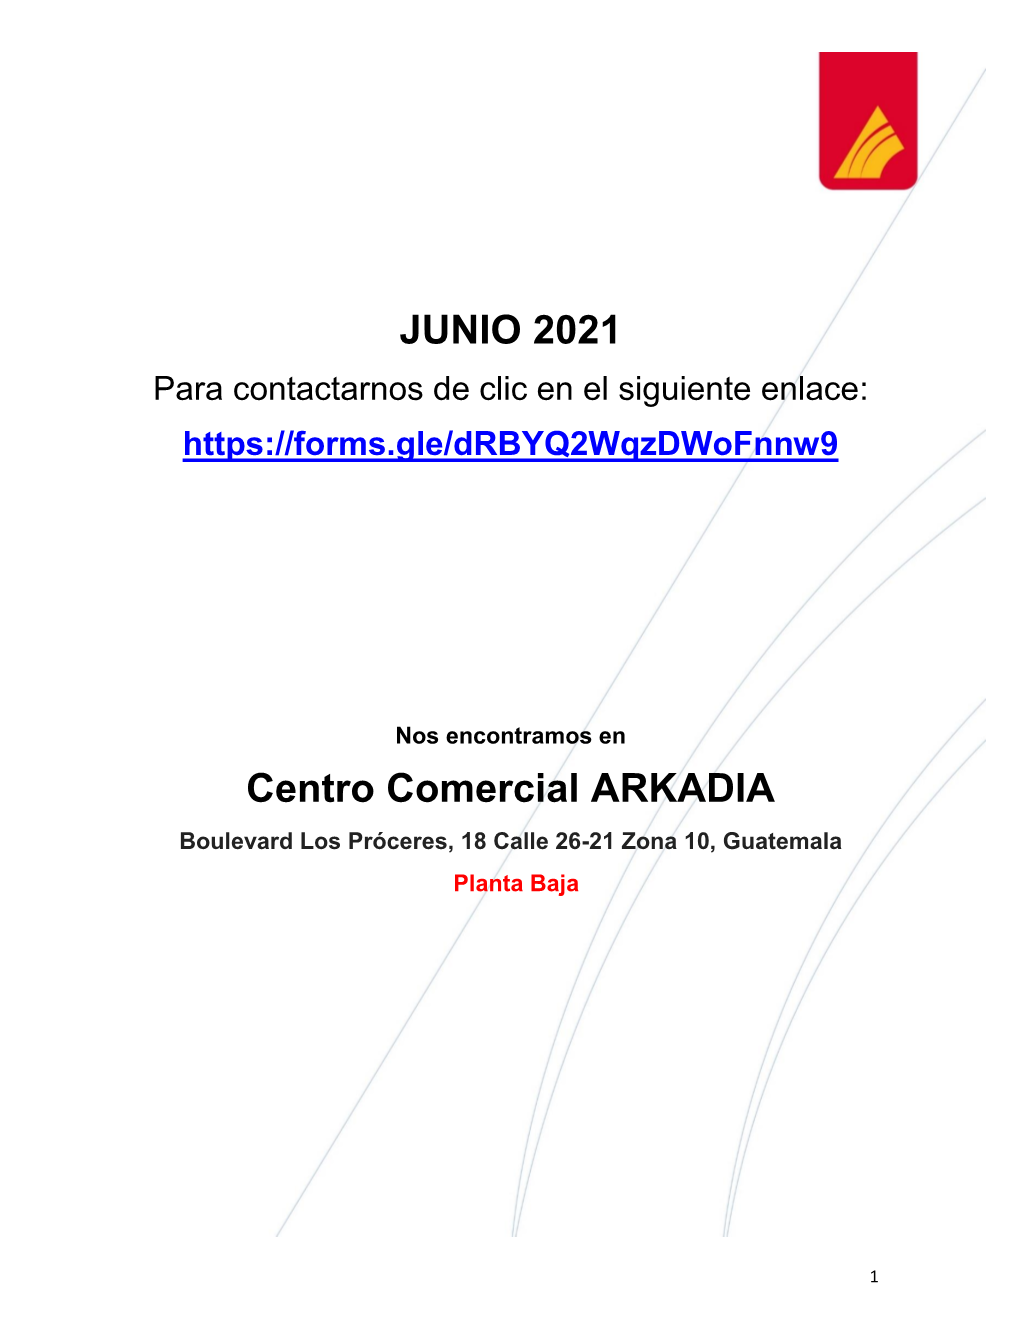 JUNIO 2021 Centro Comercial ARKADIA